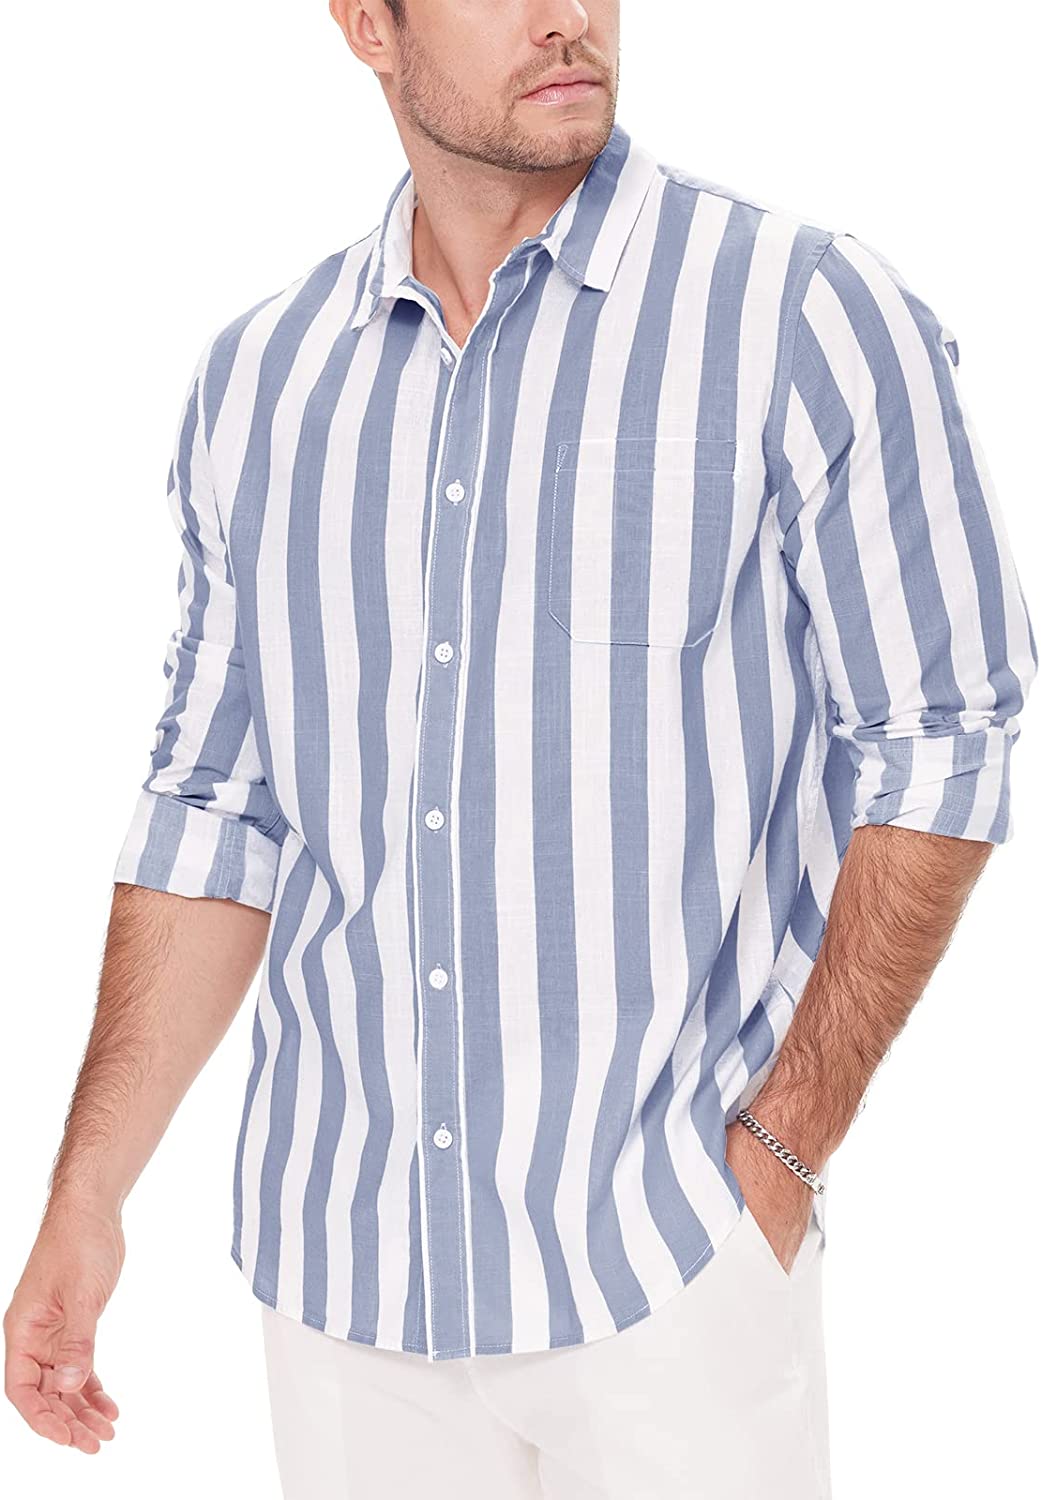 JEKAOYI Button Down Linen Shirts for Men Casual Long Sleeve Regular Fit Cotton Beach Shirts with Pocket